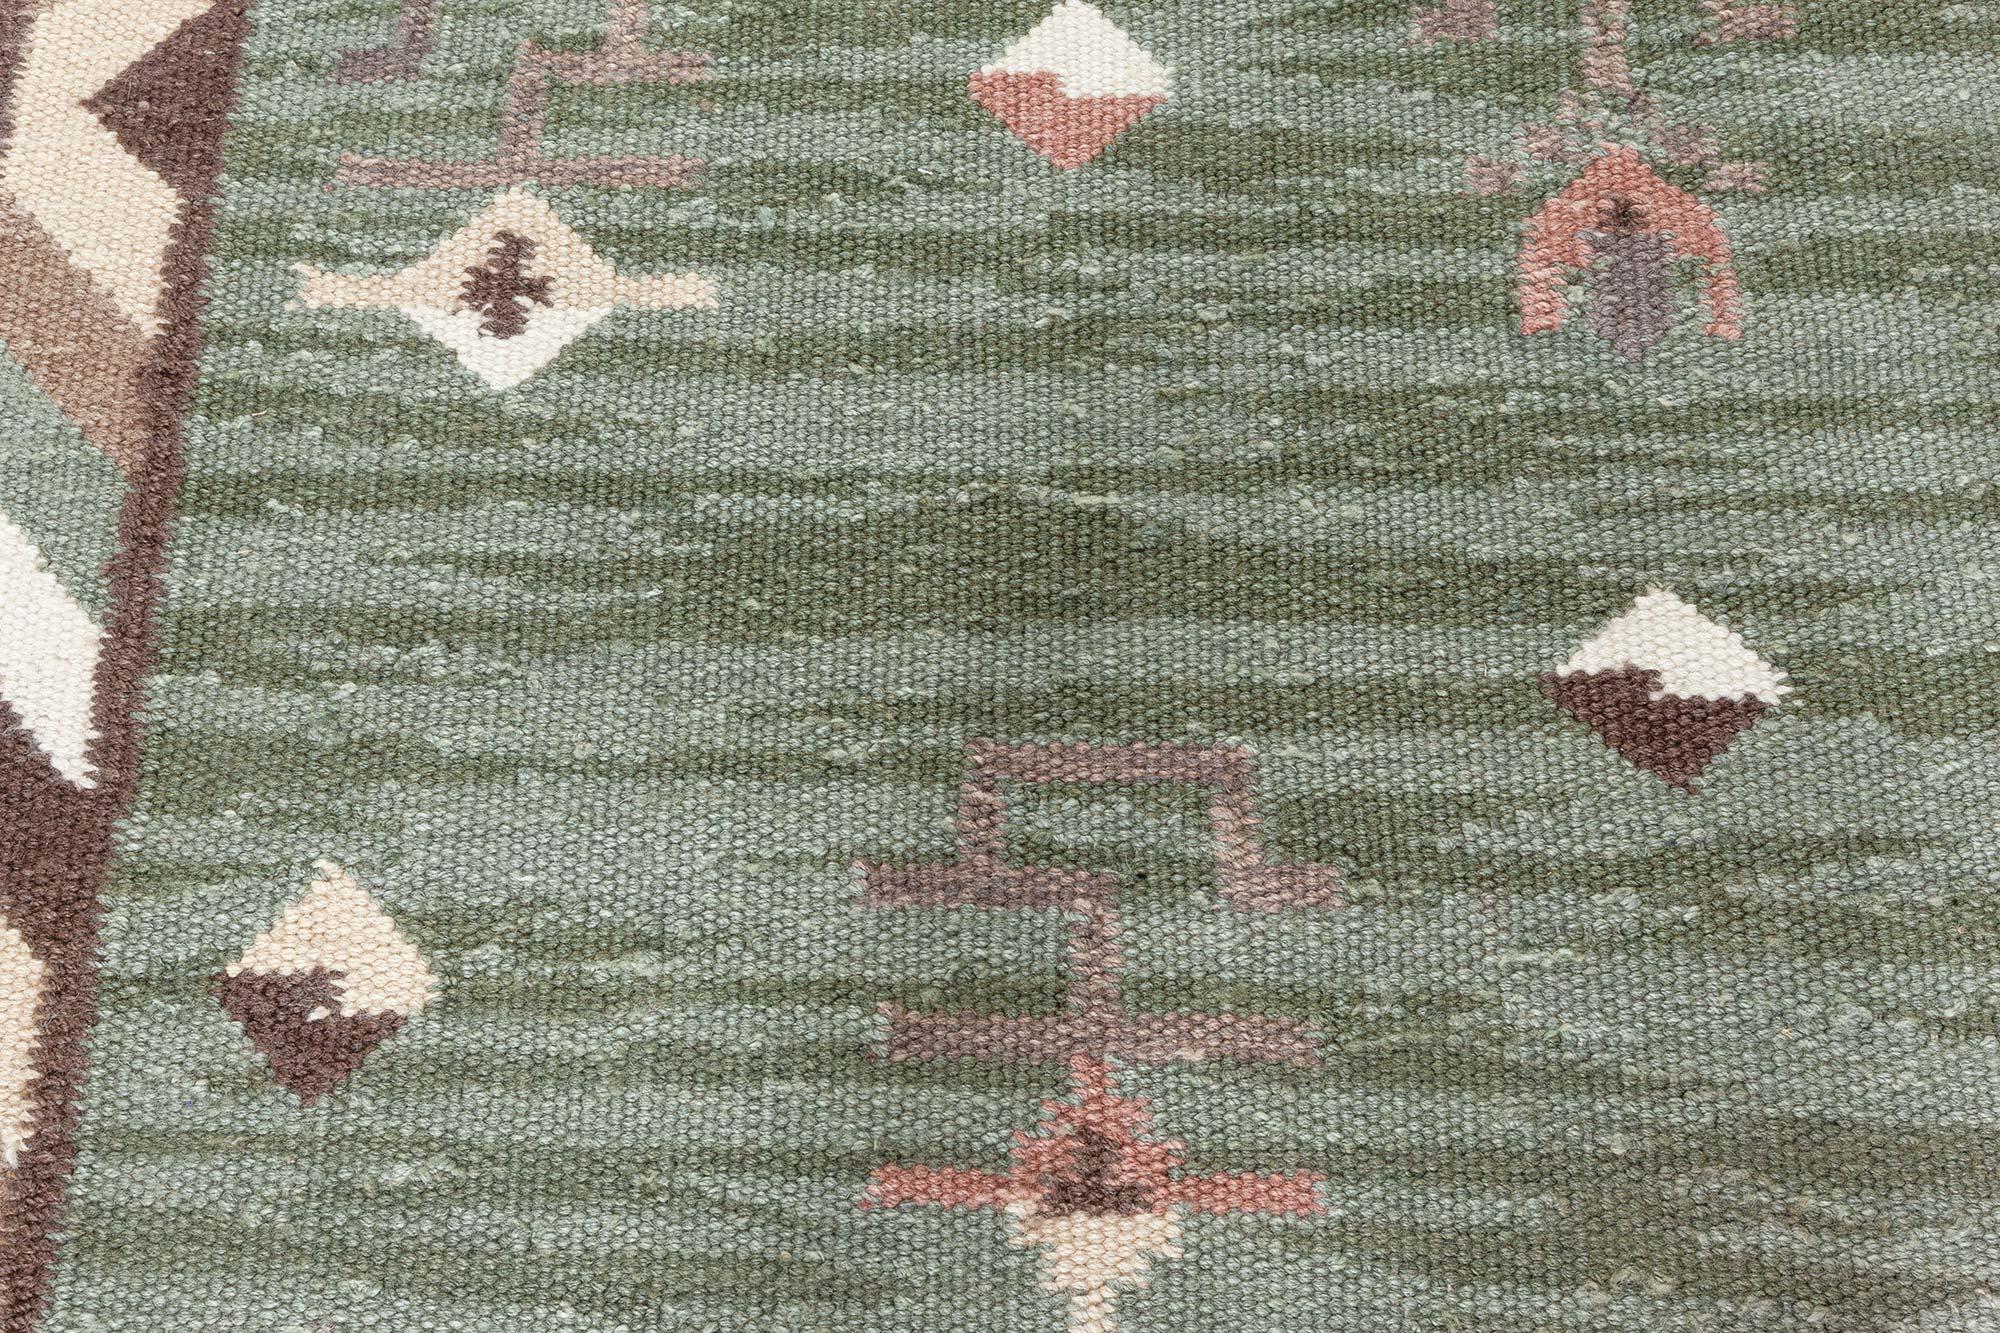 Modern Swedish inspired flat weave rug by Doris Leslie Blau
Size: 5'5